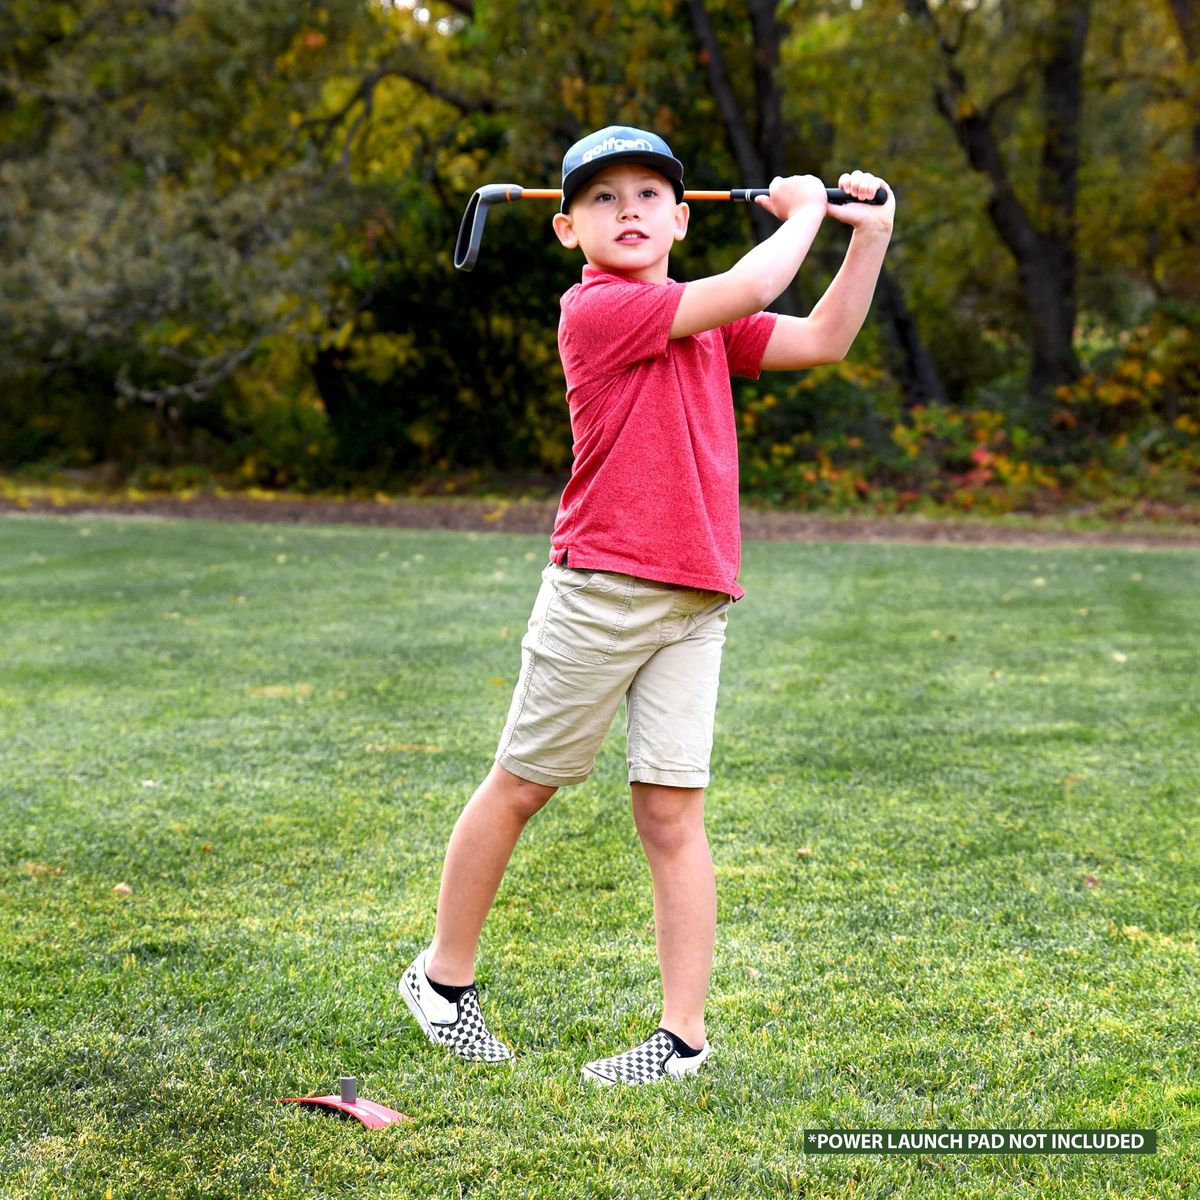 [RDY] [送料無料] PGA Tour ティーアップ・キッズ アイアン・ゴルフクラブ, スモール, レッド 右利き器用 [楽天海外通販] | PGA Tour Tee-Up Kids Iron Golf Club, Small, Red Right Handed Dexterity